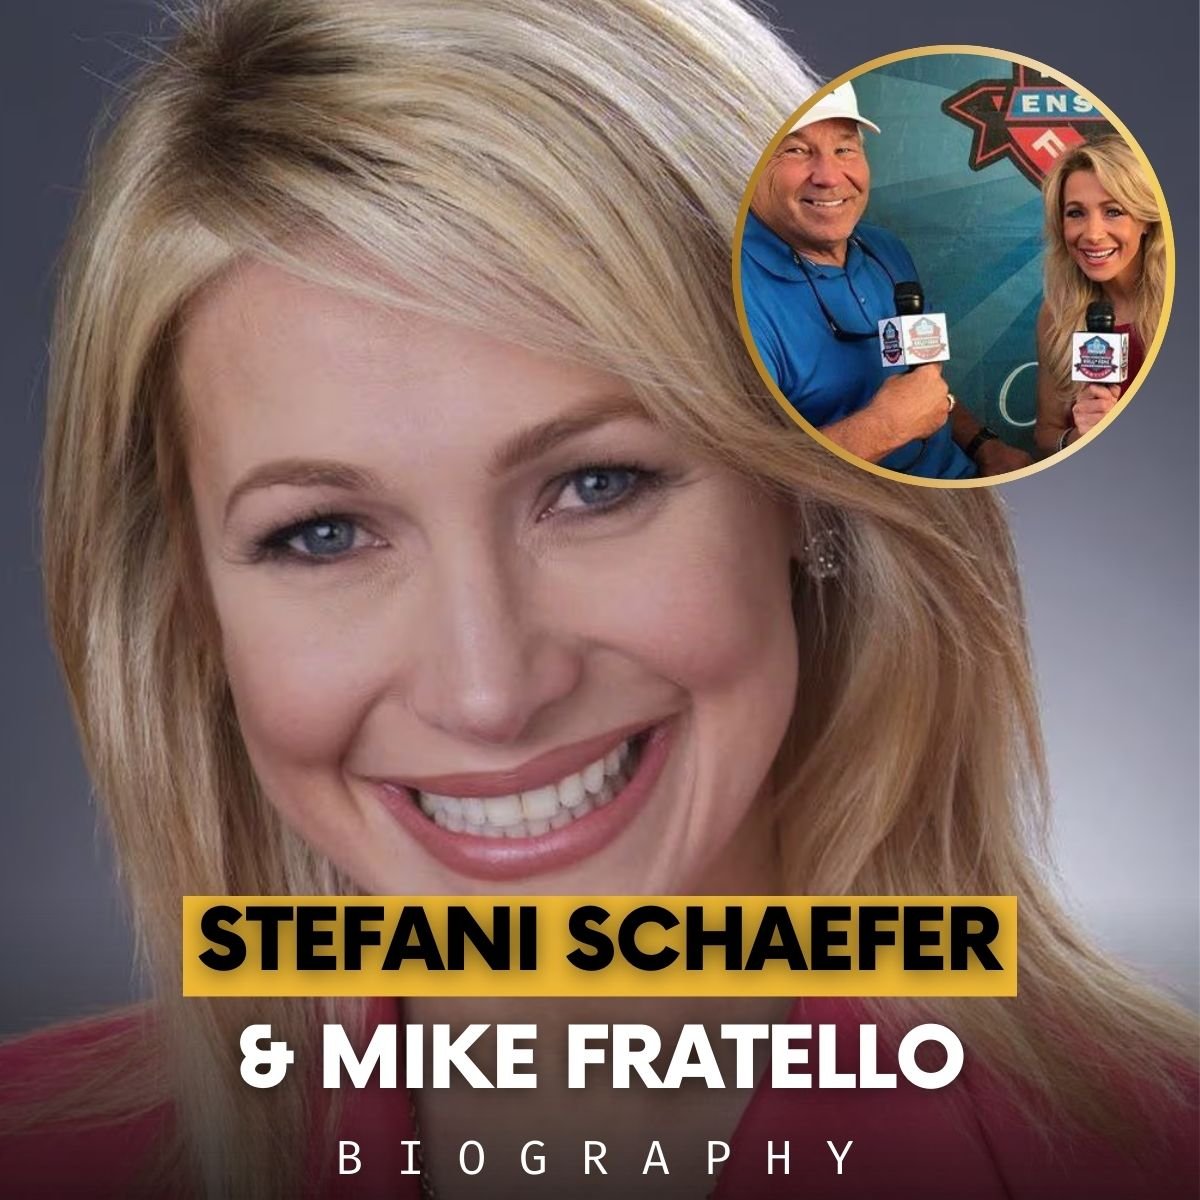 Stefani Schaefer and Mike Fratello